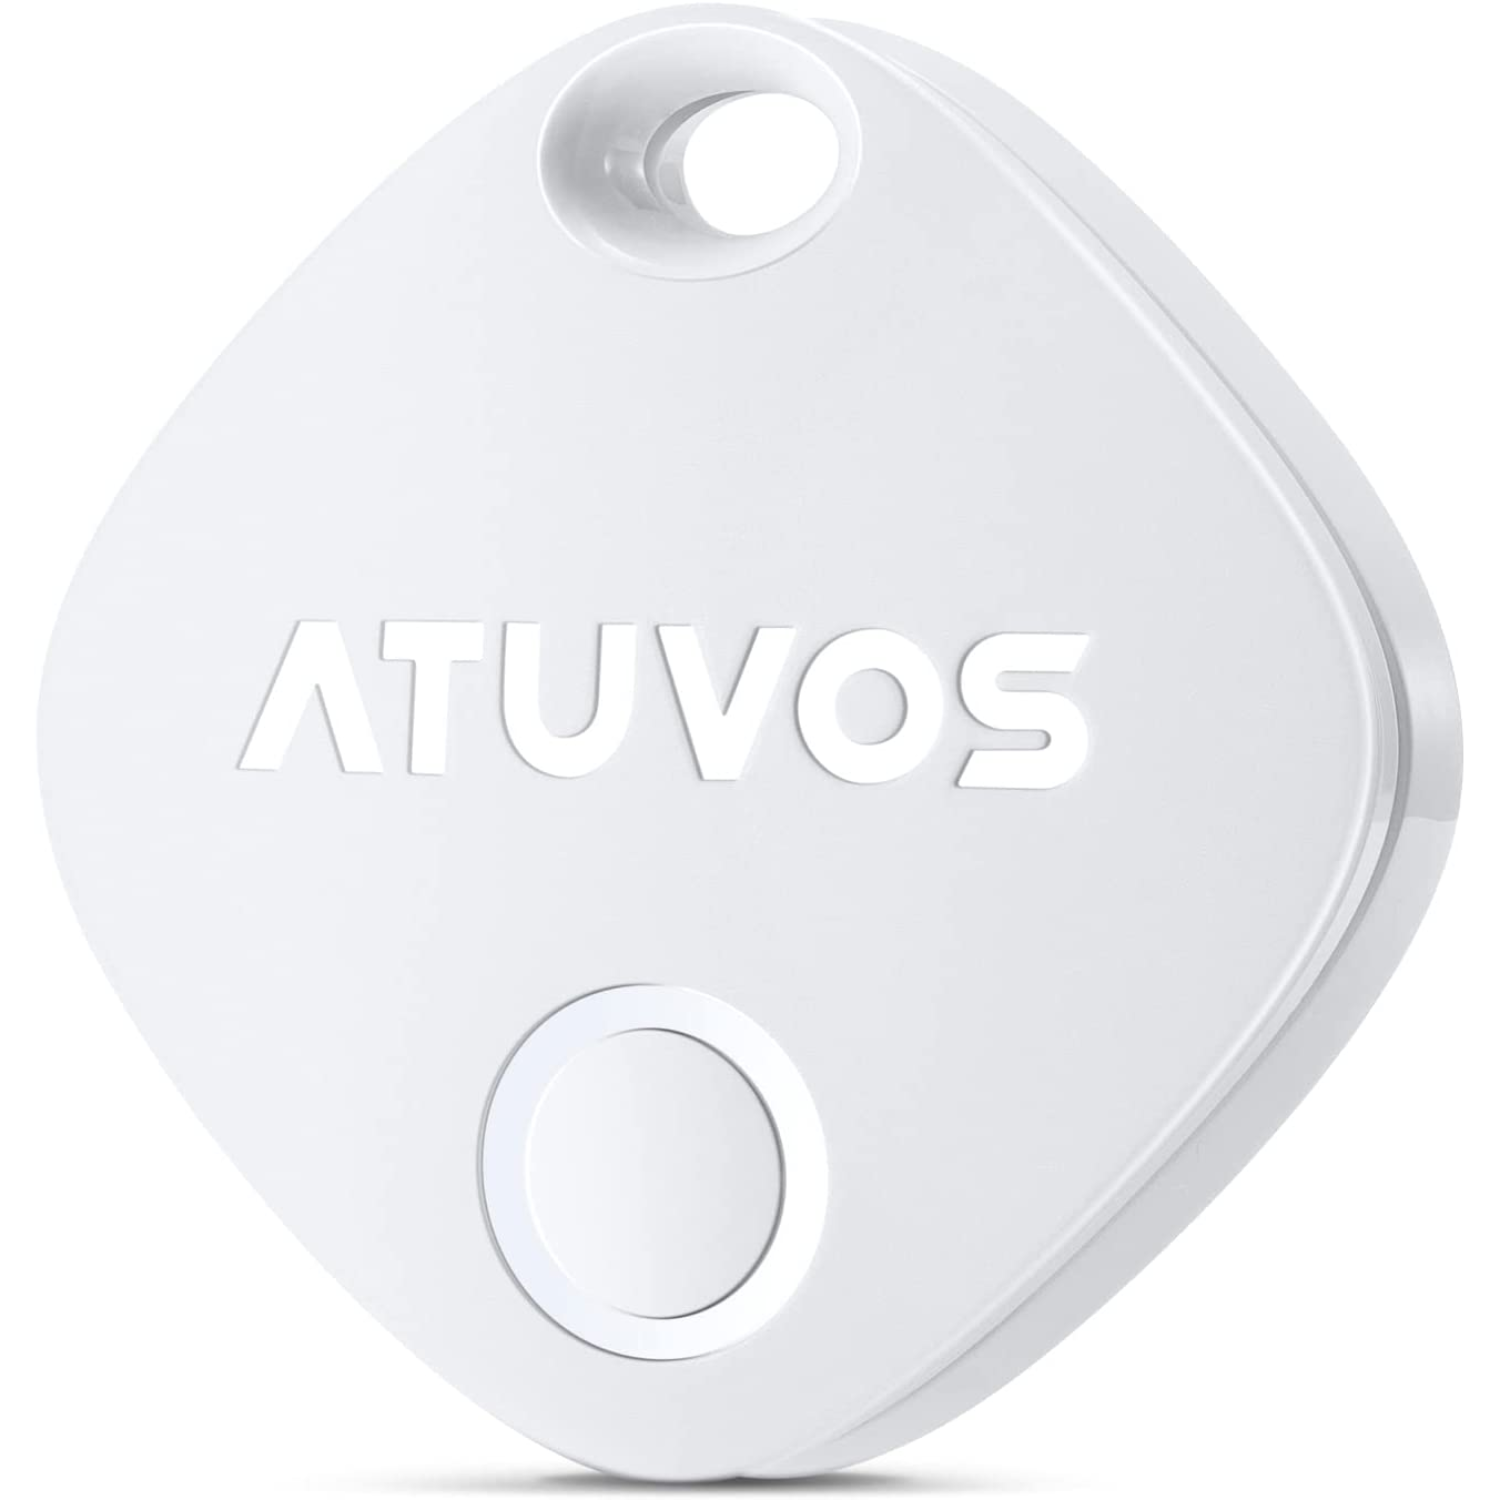 ATUVOS Tag Localizador con Apple Find My (solo iOS) Rastreador Impermeable Bluetooth Inteligente